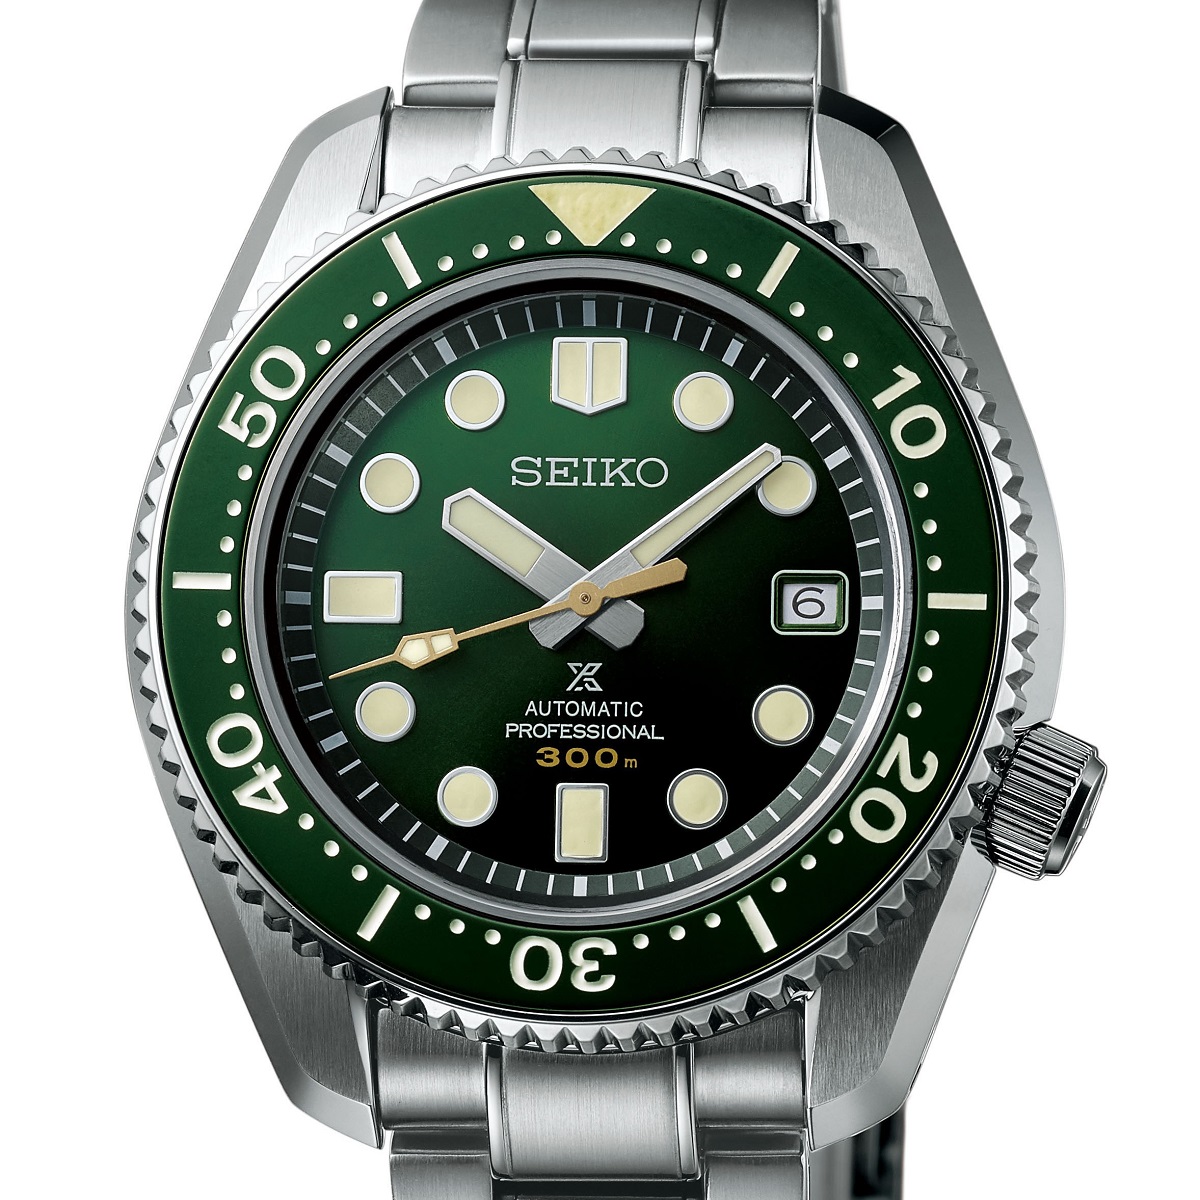 Seiko Prospex SLA019 Limited Edition Dive Watch | aBlogtoWatch